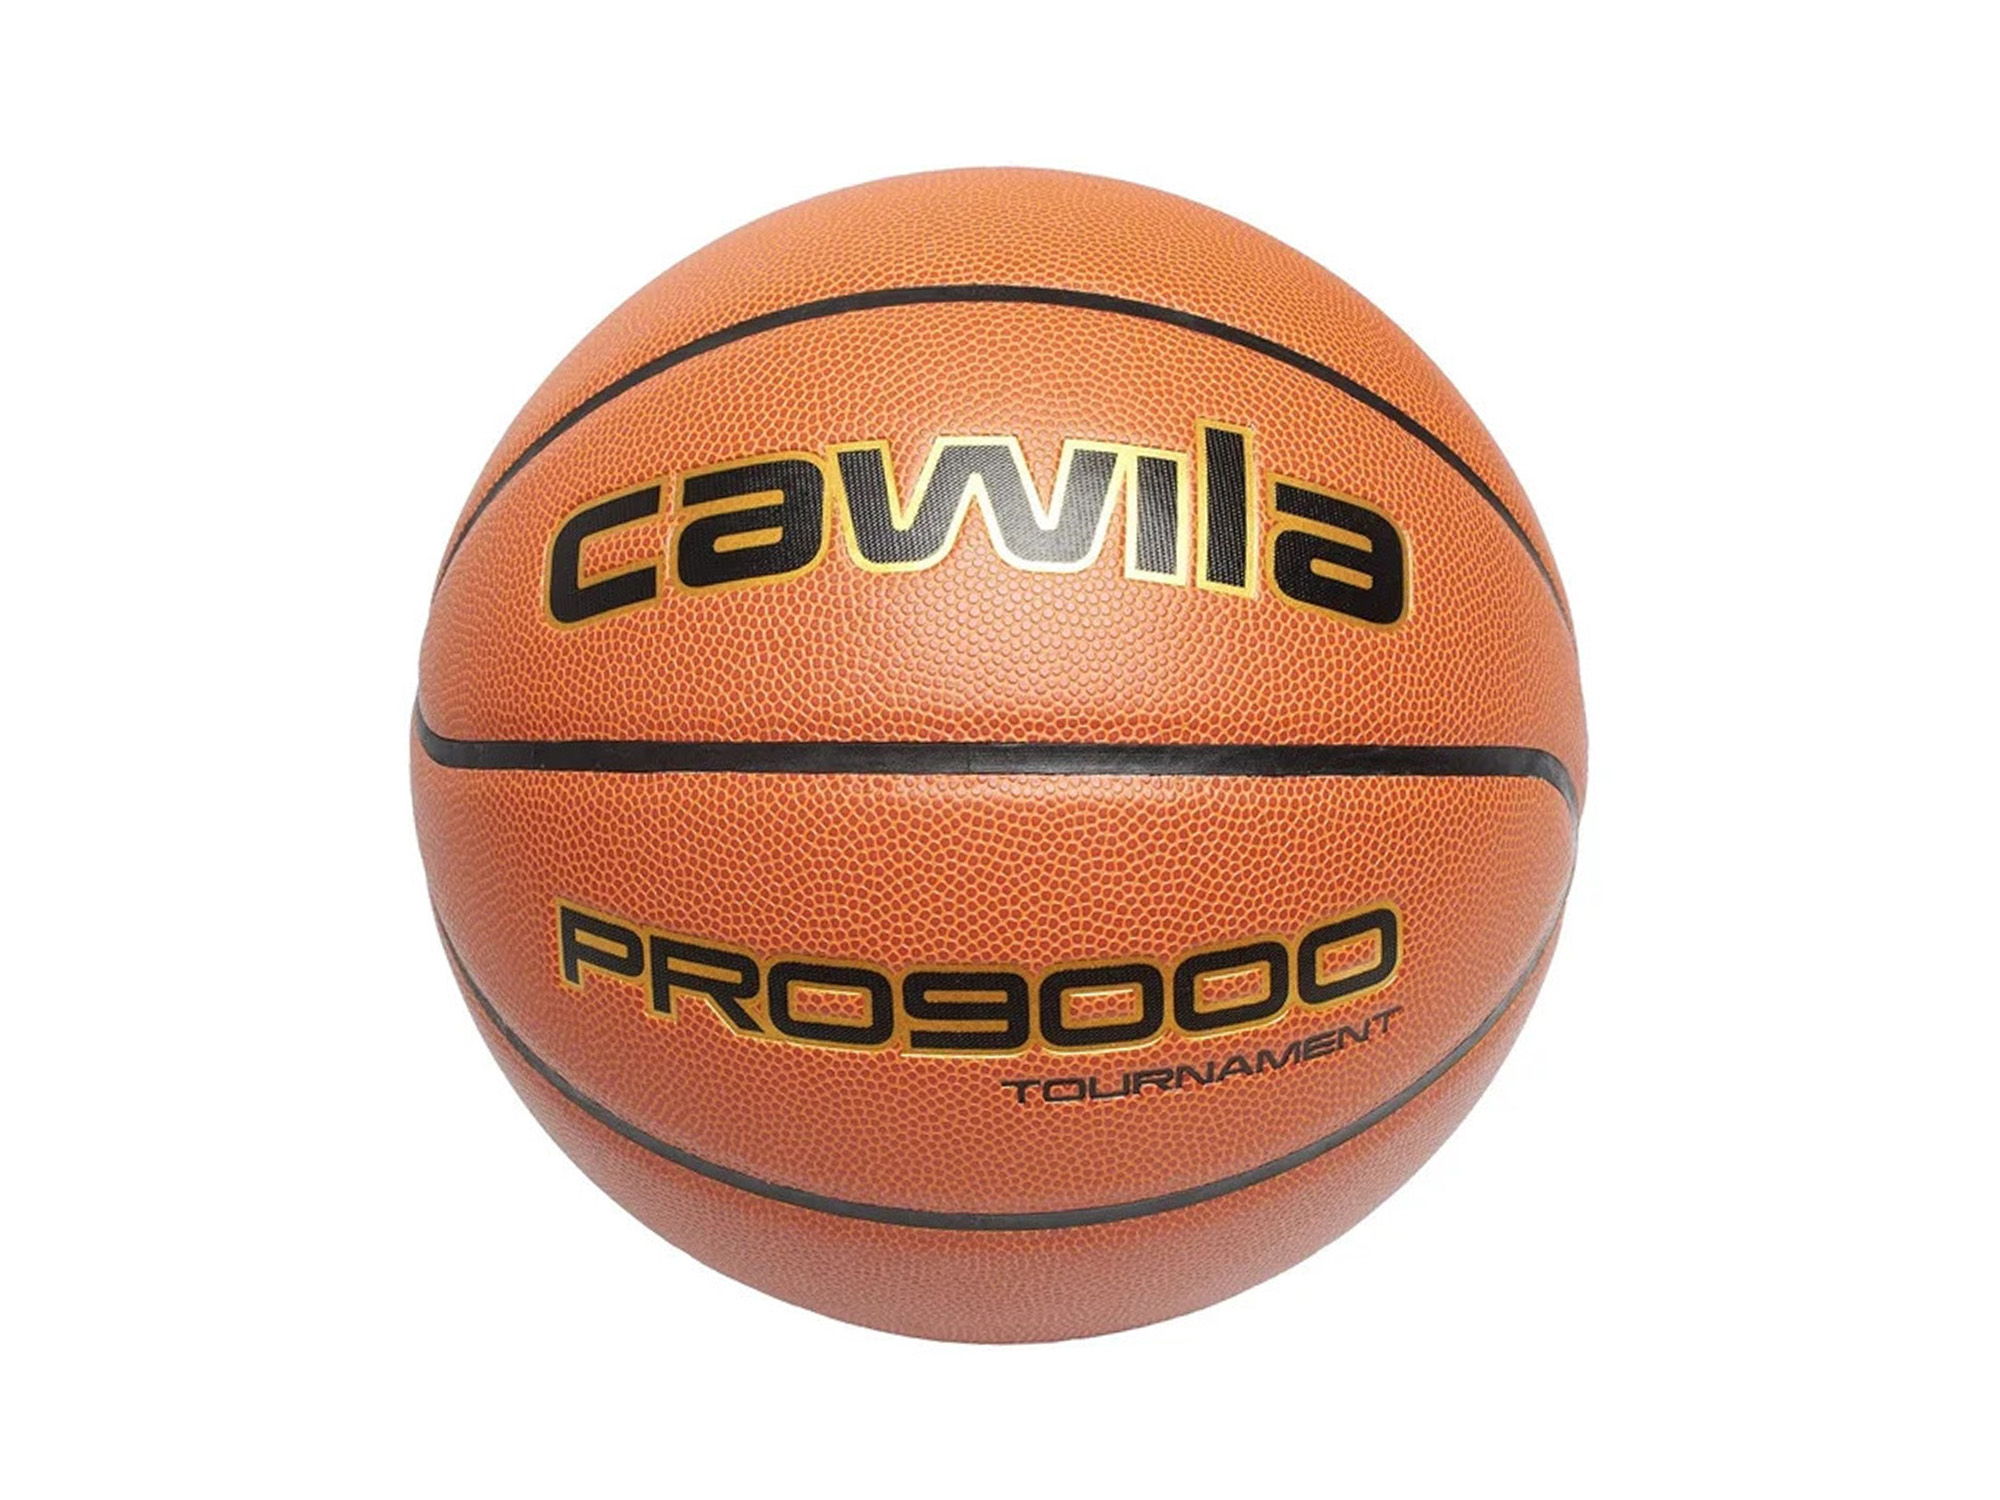 Cawila Pro9000 Indoor/Outdoor Basketball